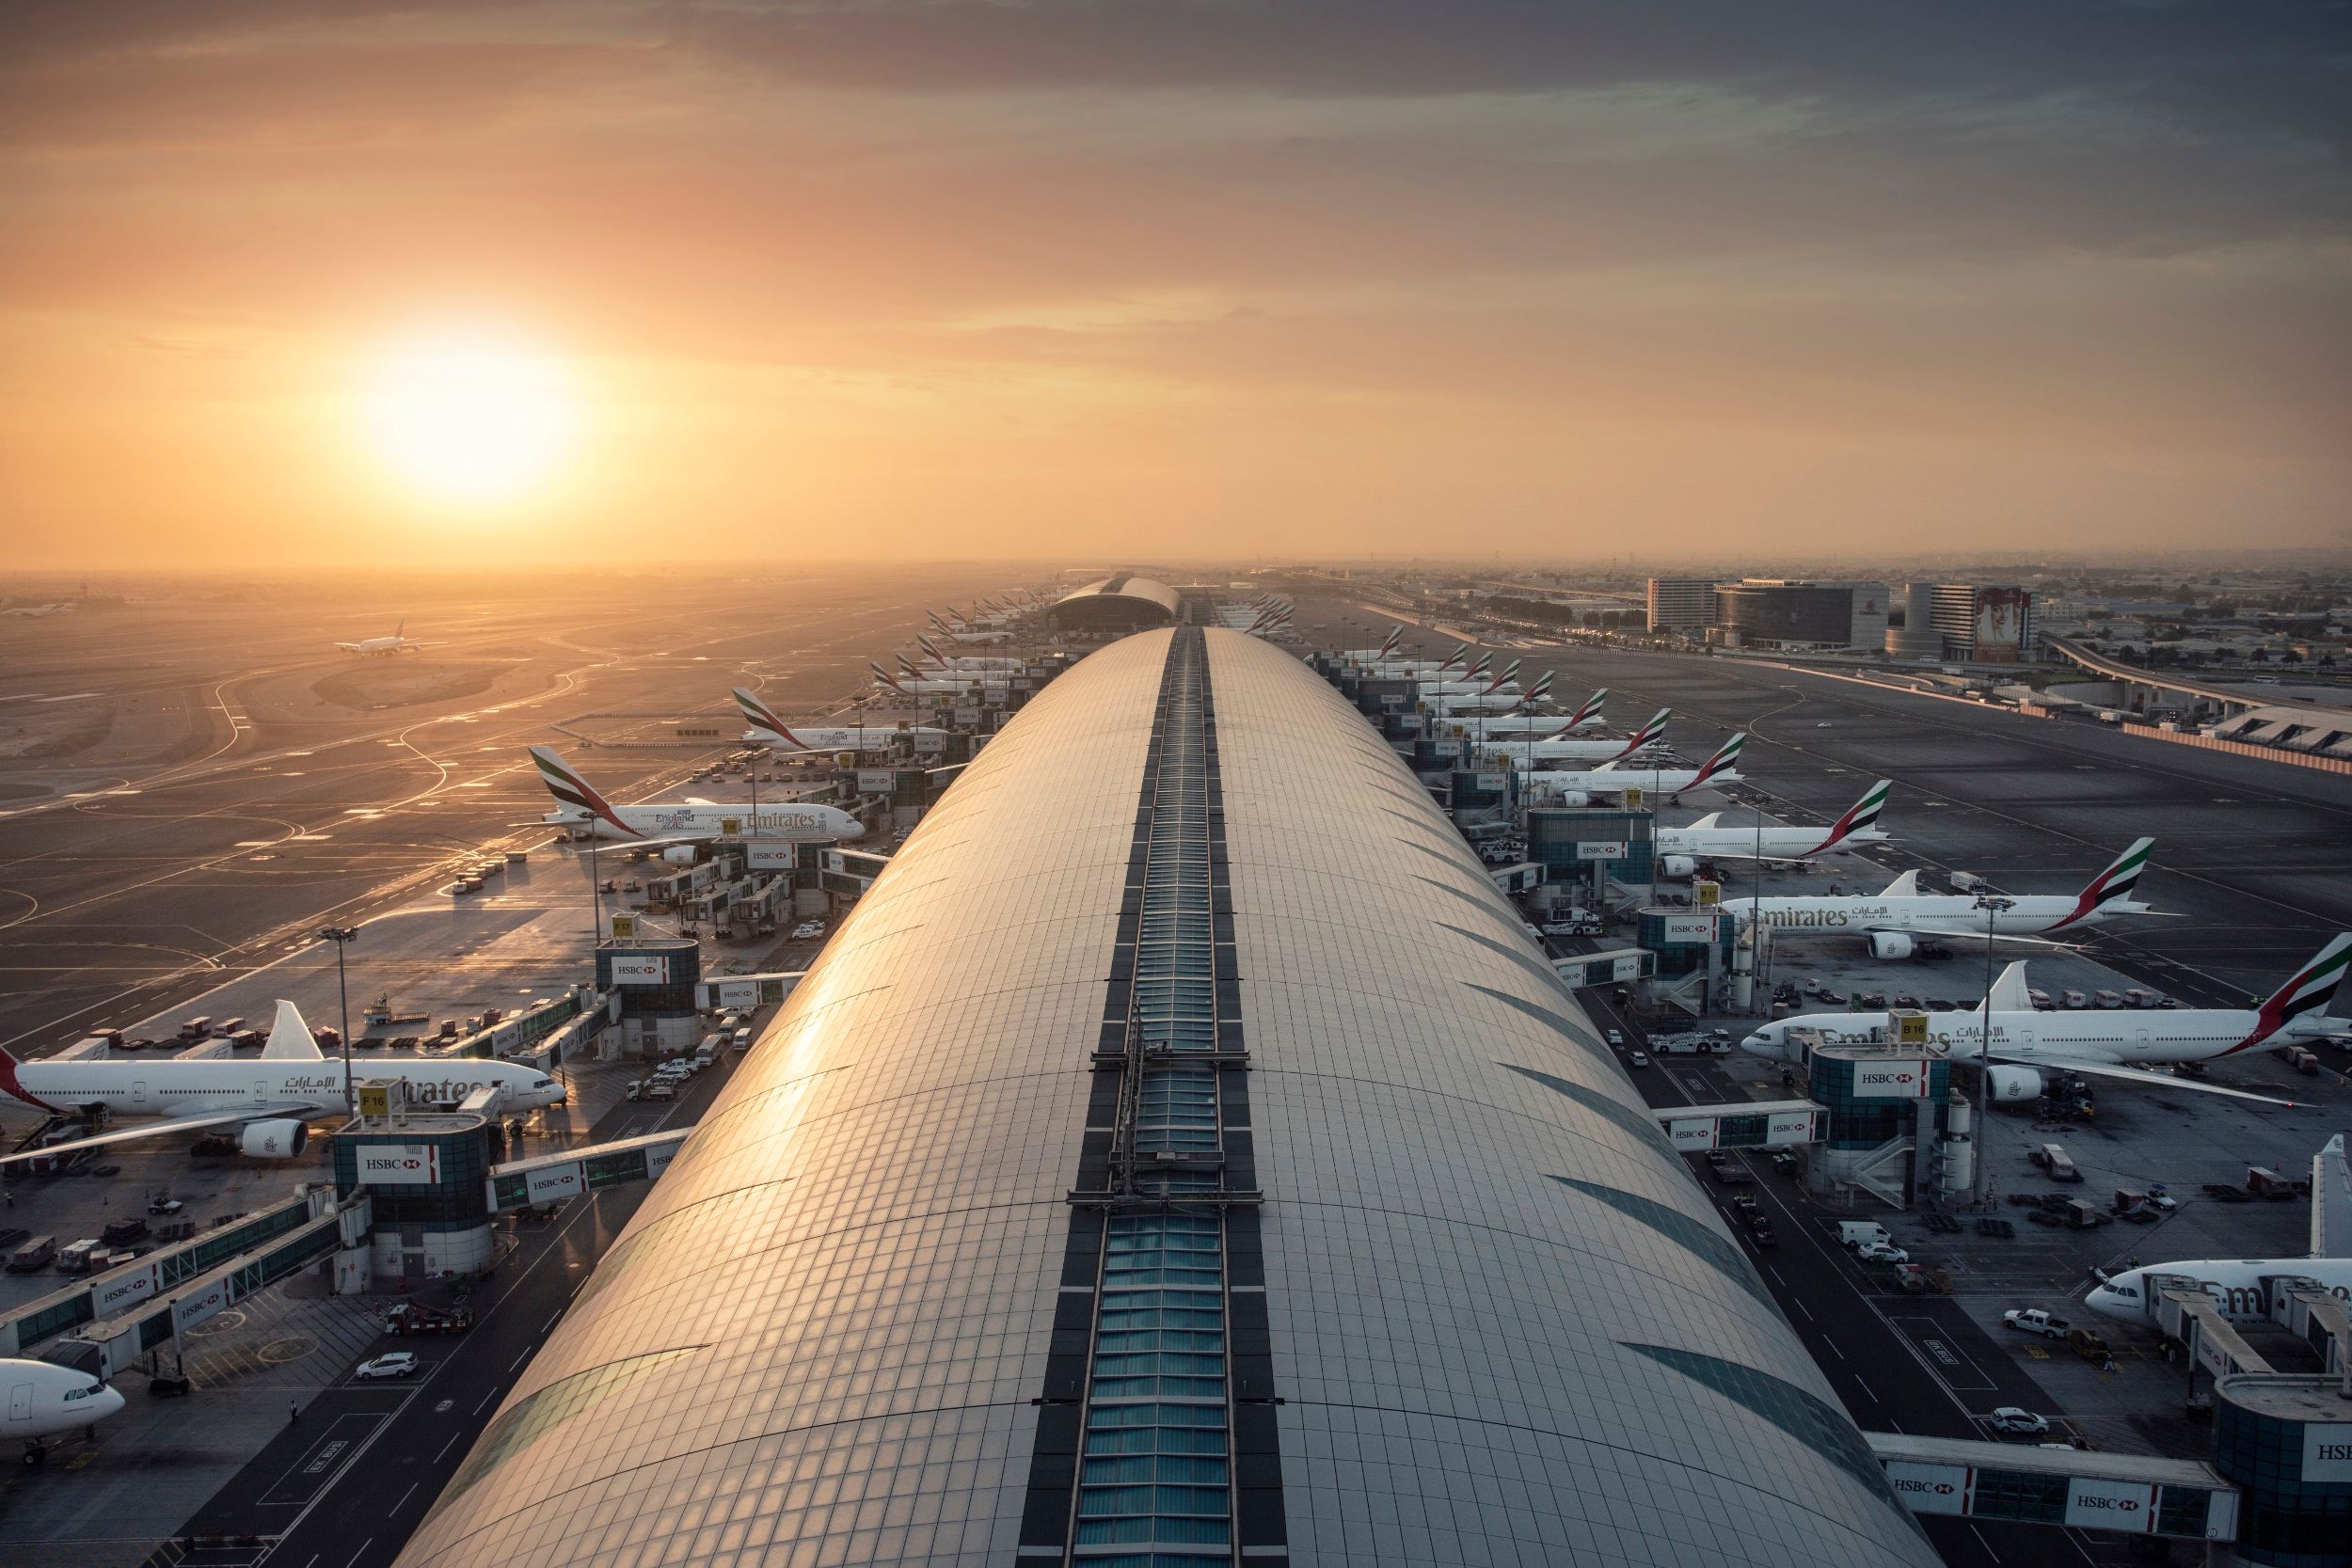 concoursebatc - Dubai International Airport (DXB) View of Concourse B from ATC Tower